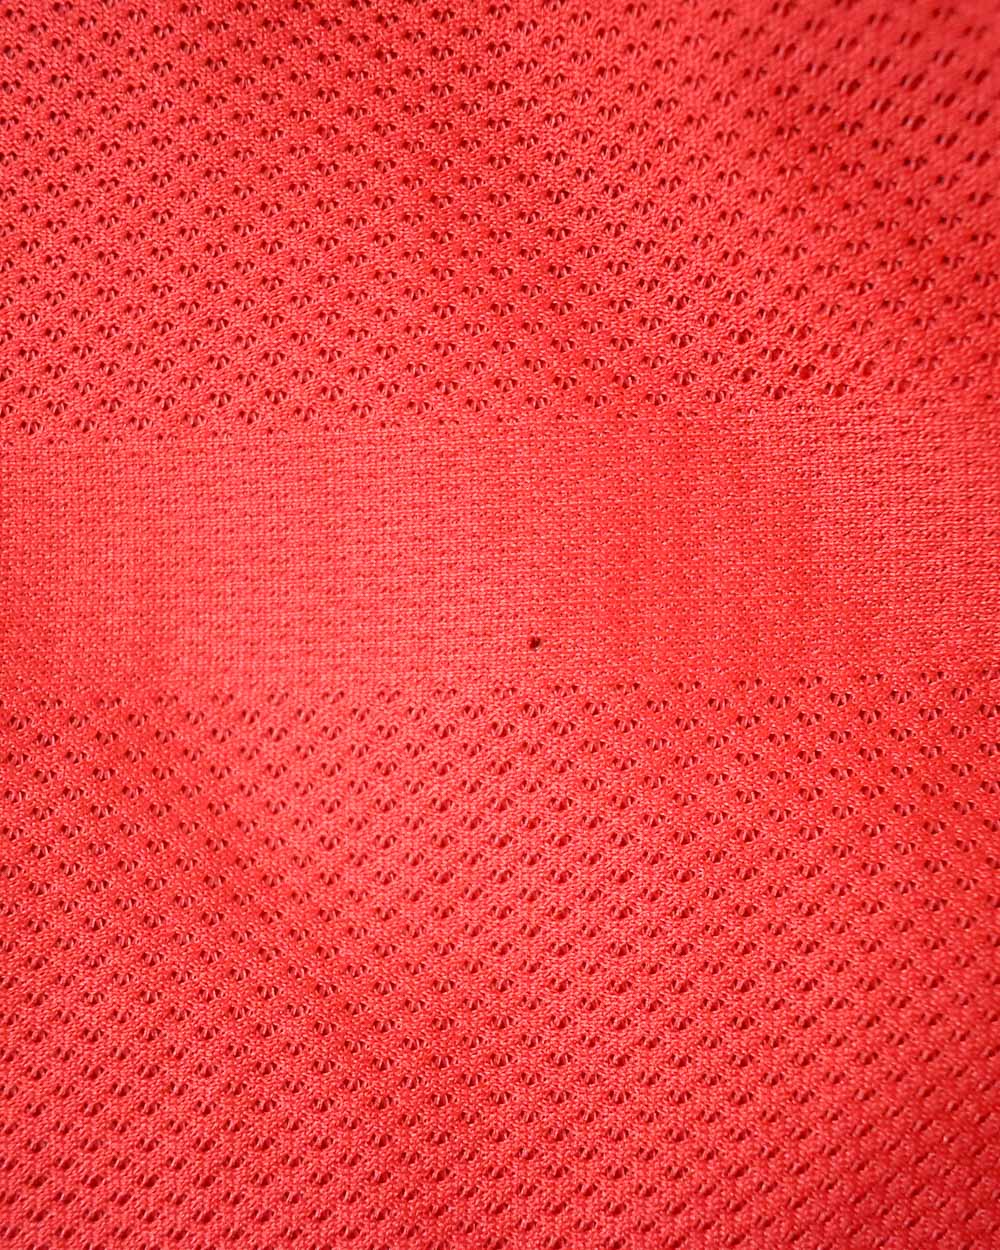 Red Reebok Liverpool 1998/00 Home Football Shirt - XX-Large